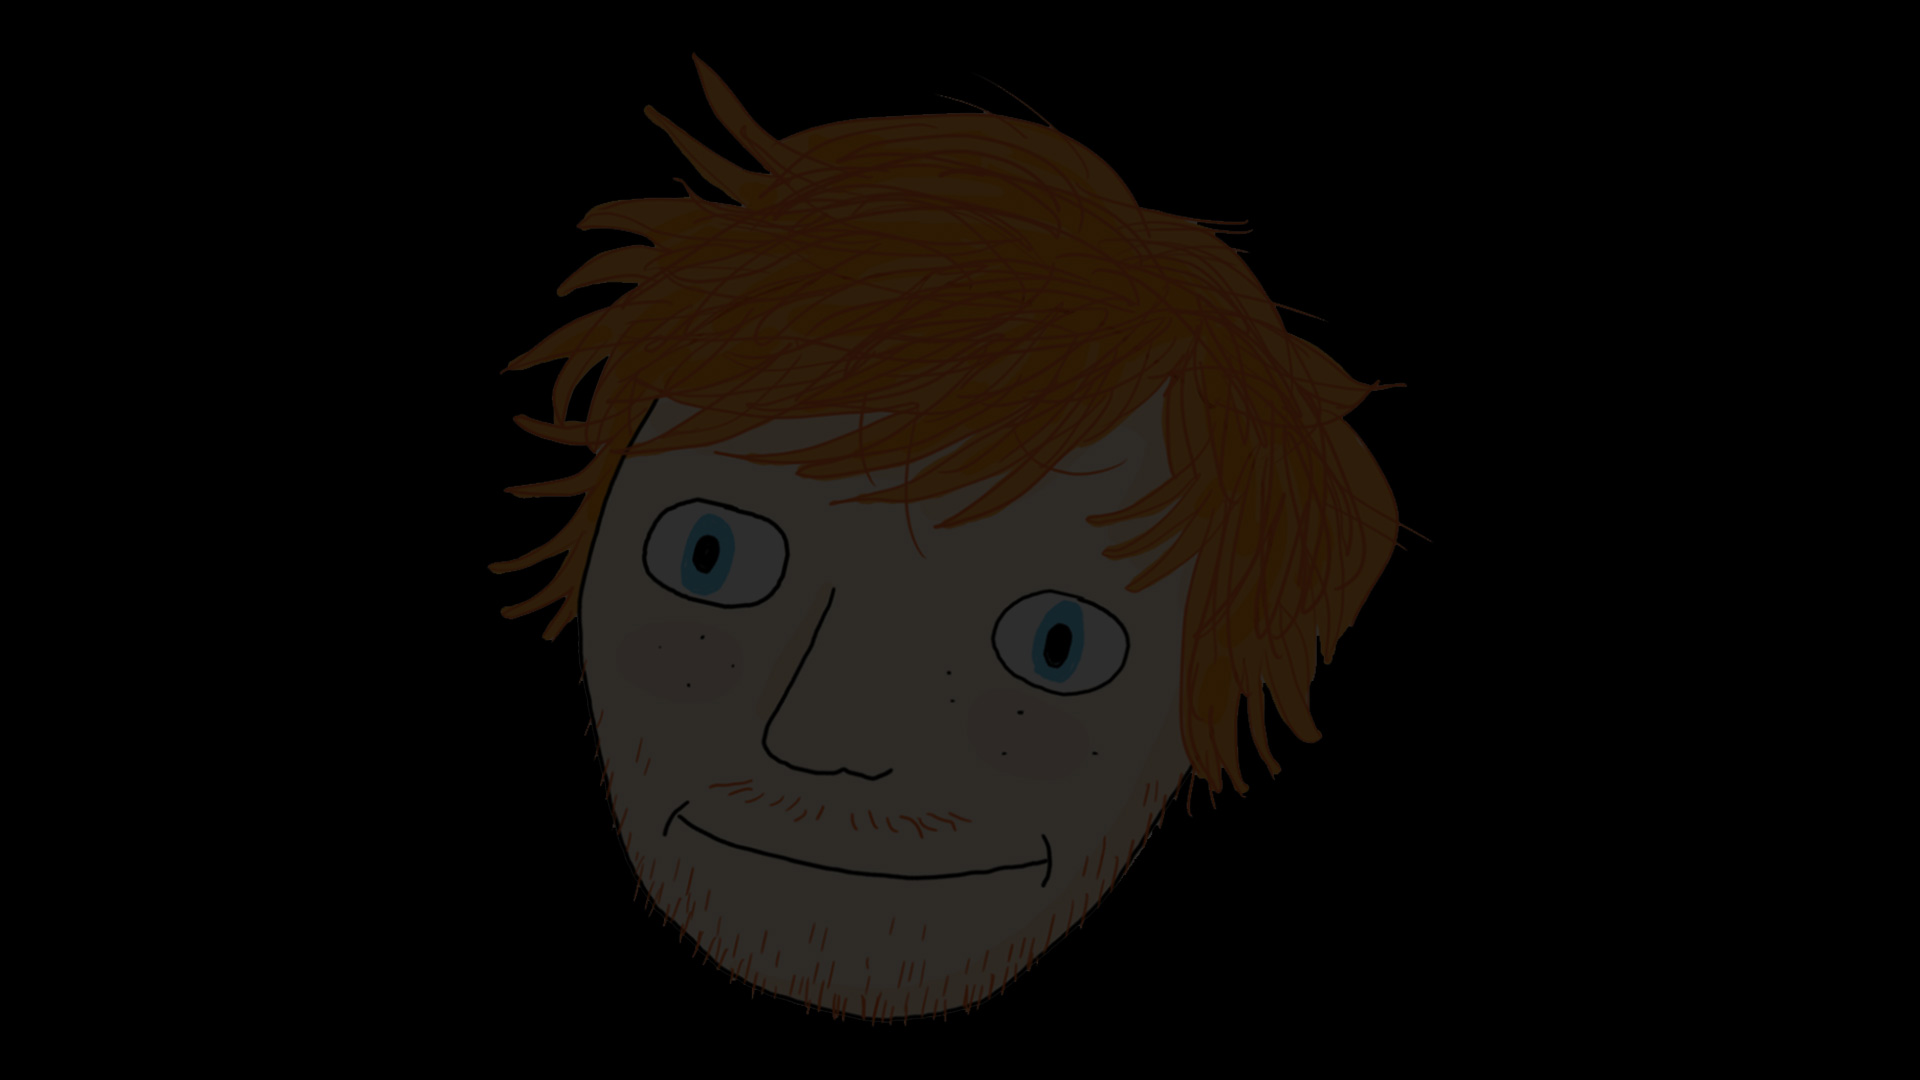 Ed Sheeran in the dark